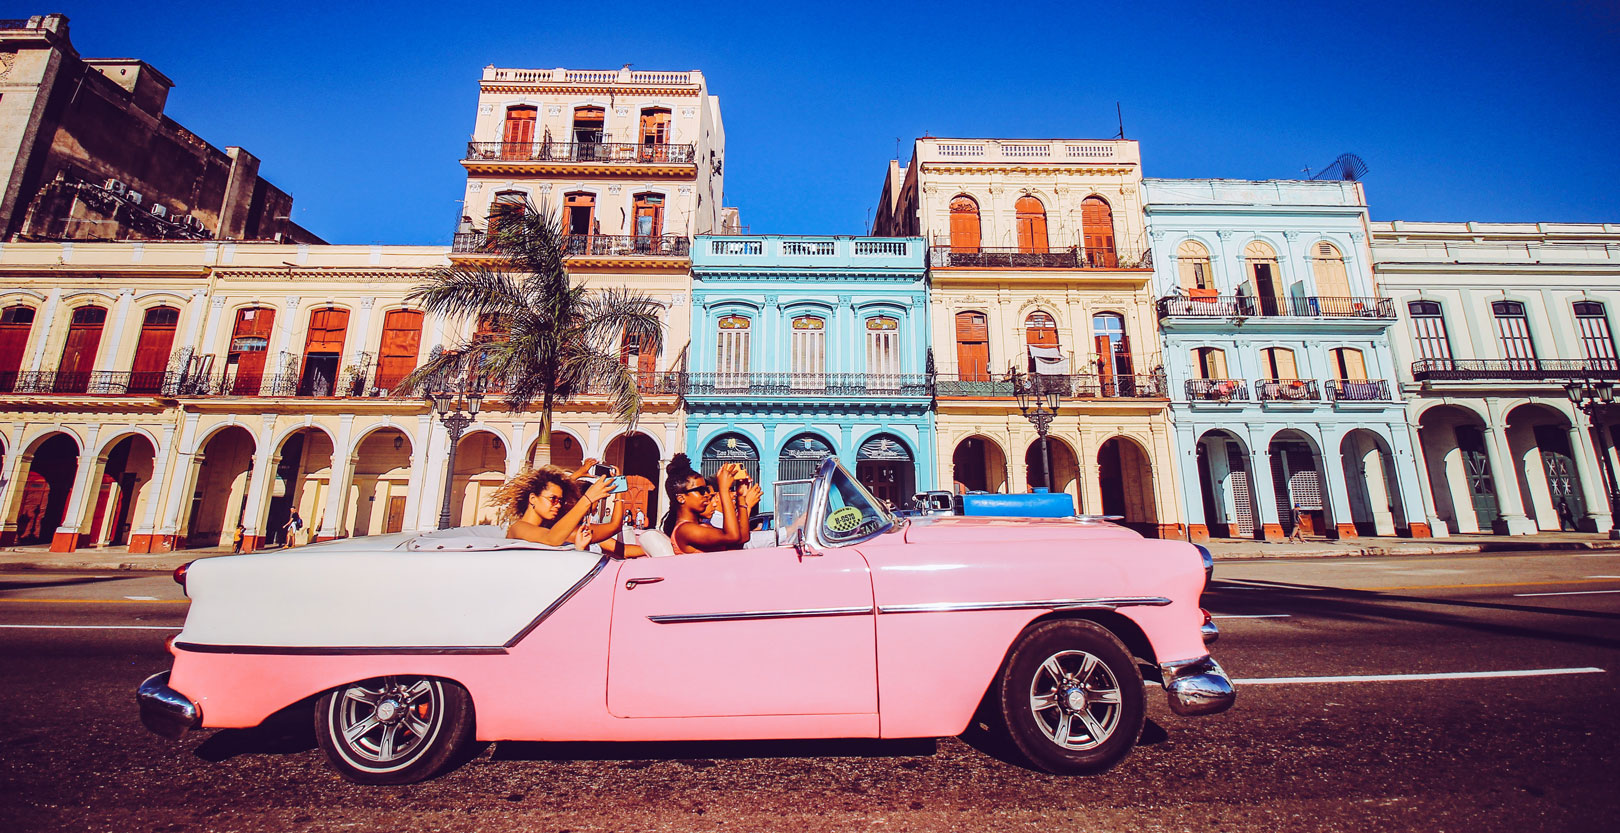 Vintage car in Old Havana (Habana Vieja)